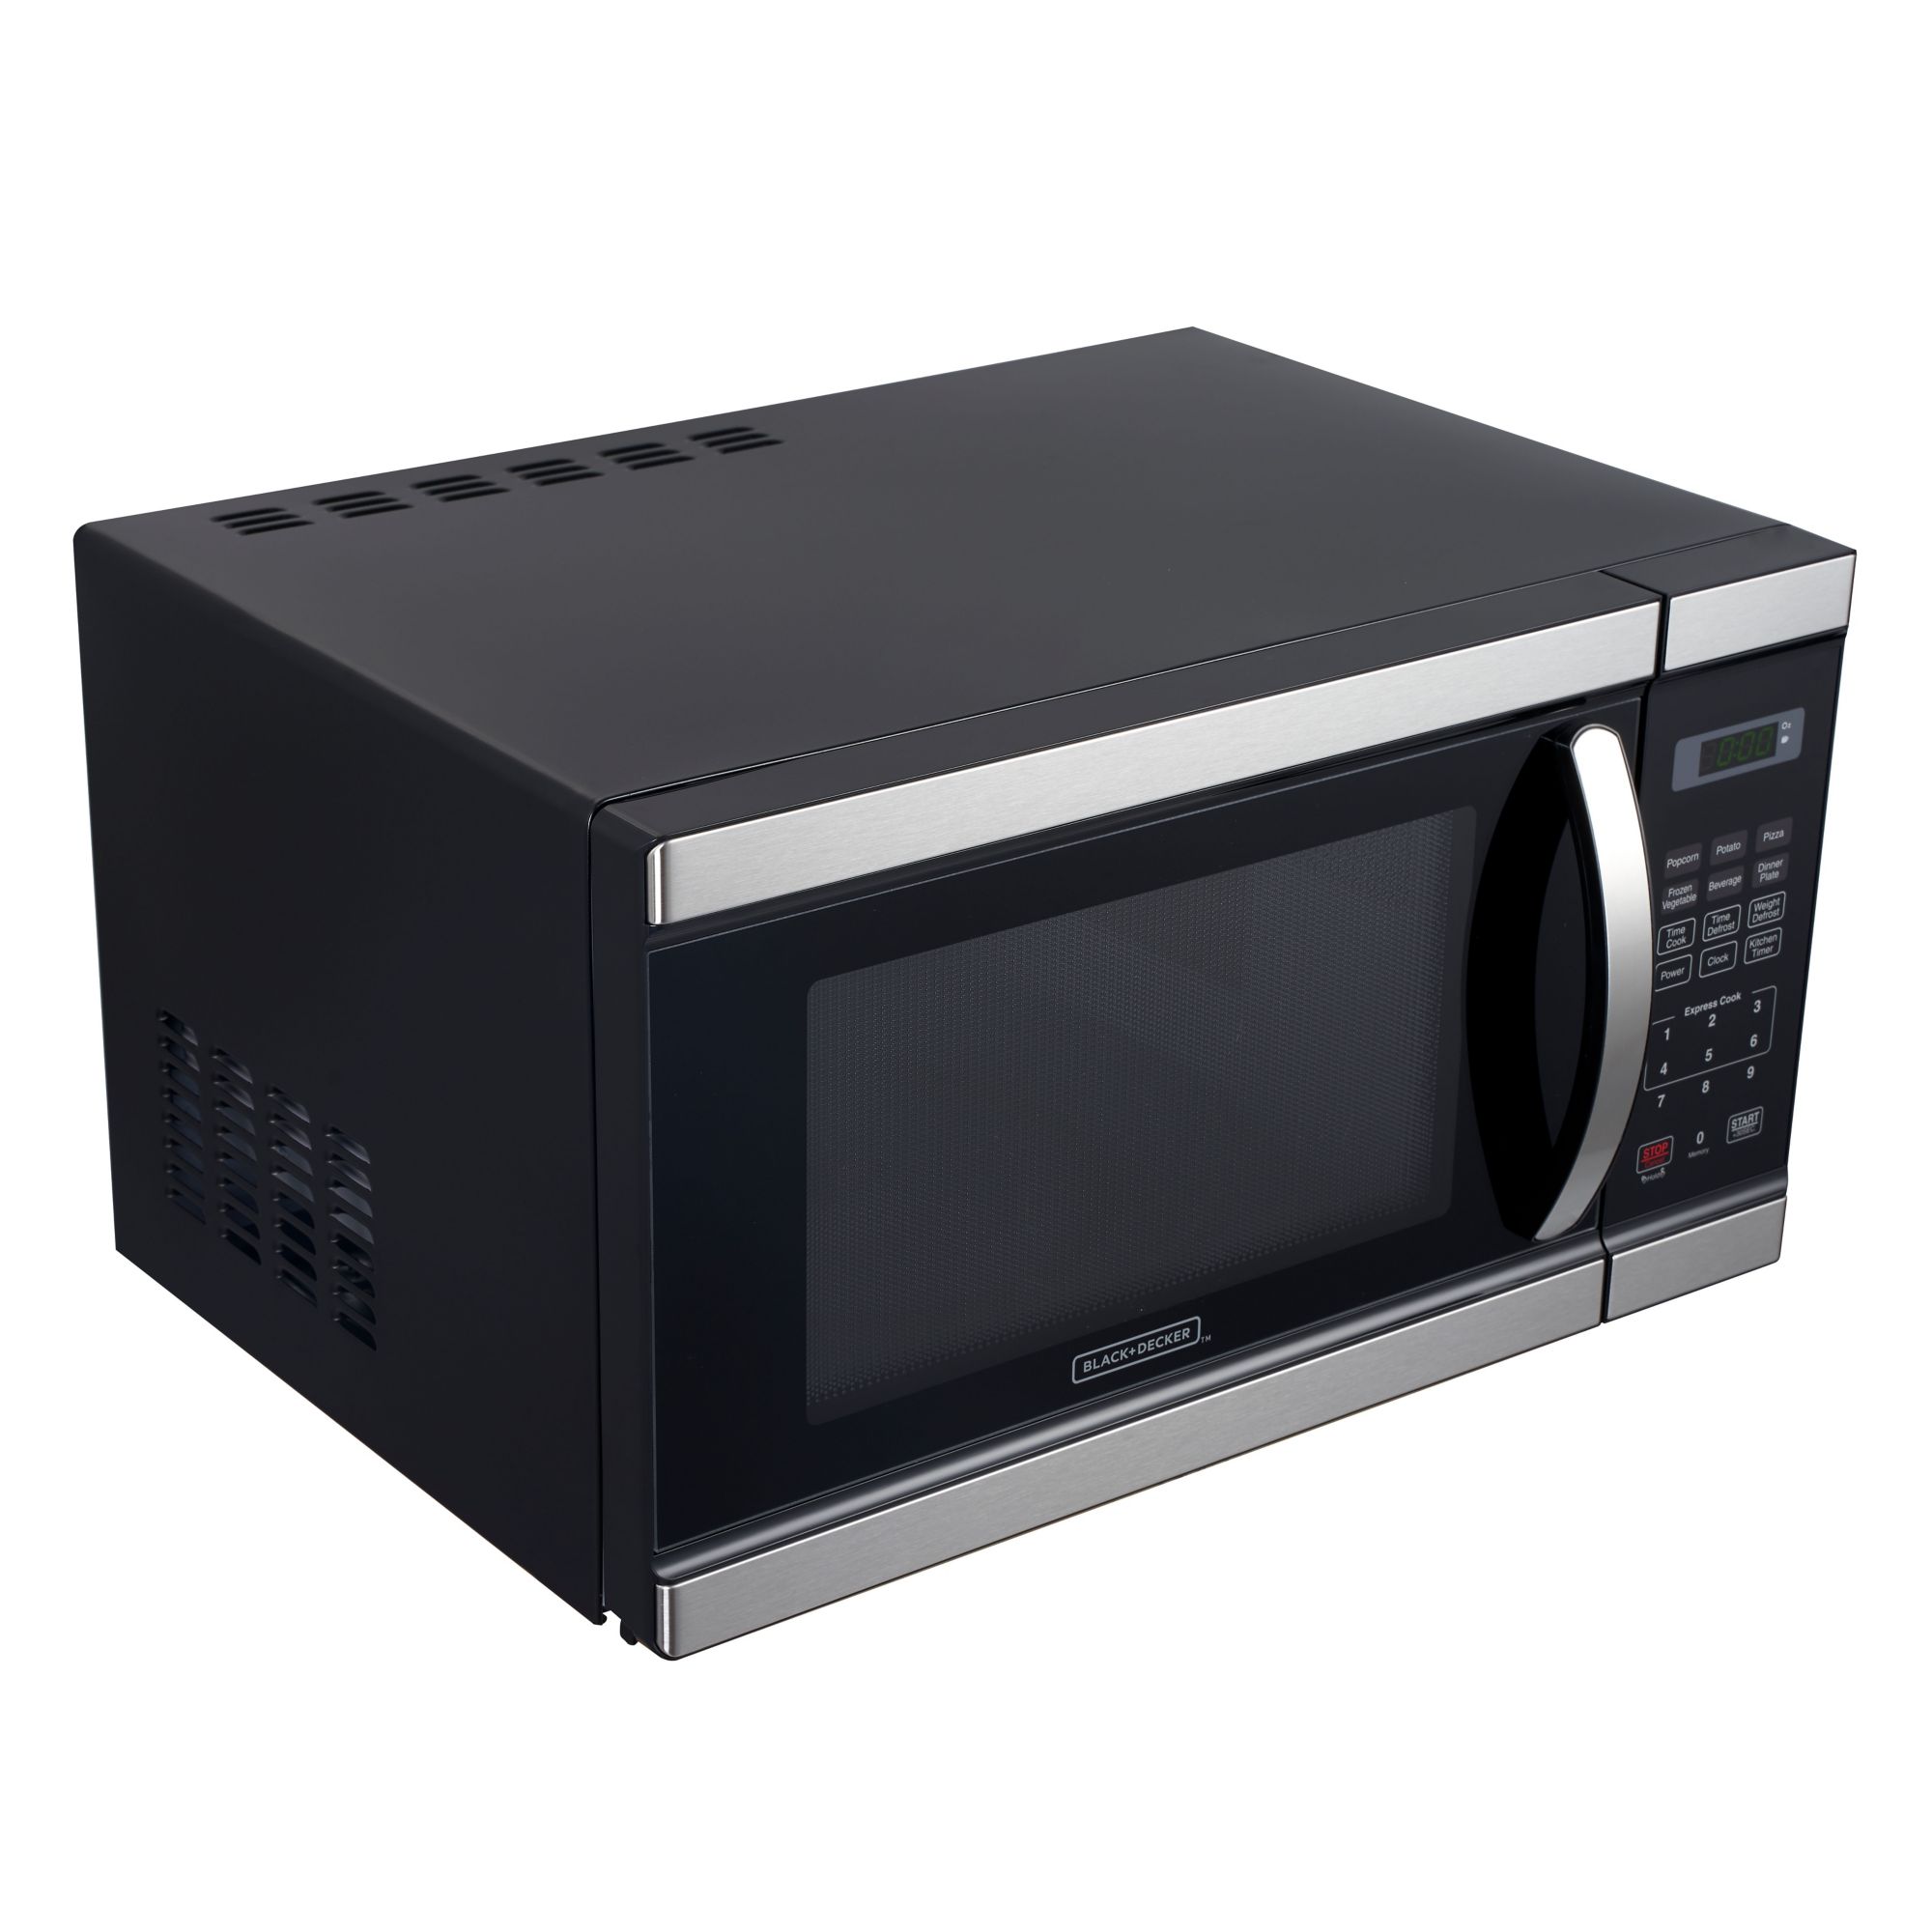 Black+Decker EM031MFOP2 1.1-Cu. Ft. Microwave, White - 20583040